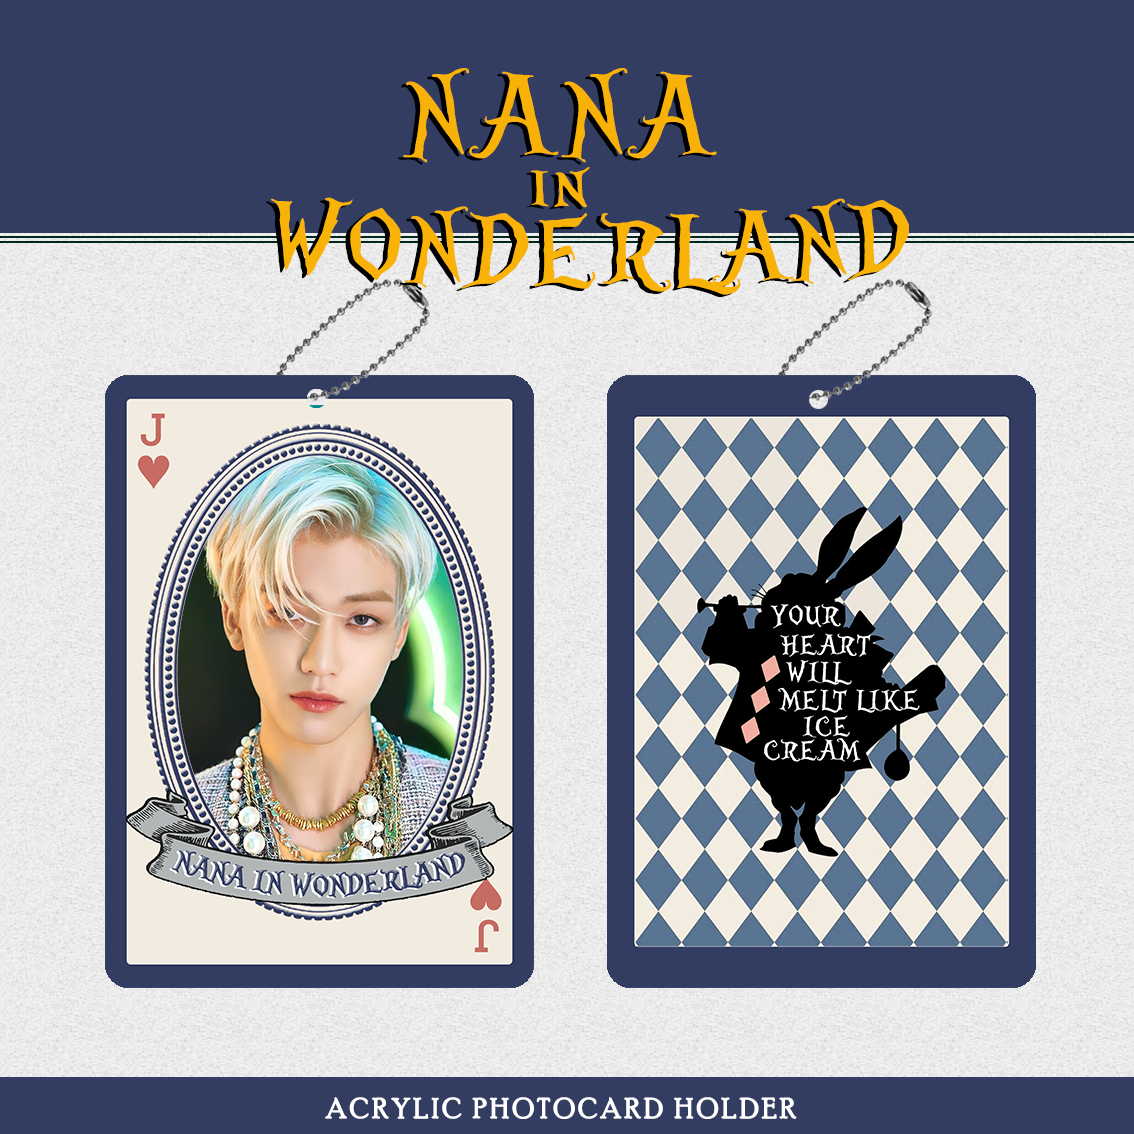 NANA in Wonderland: acrylic photocard holder